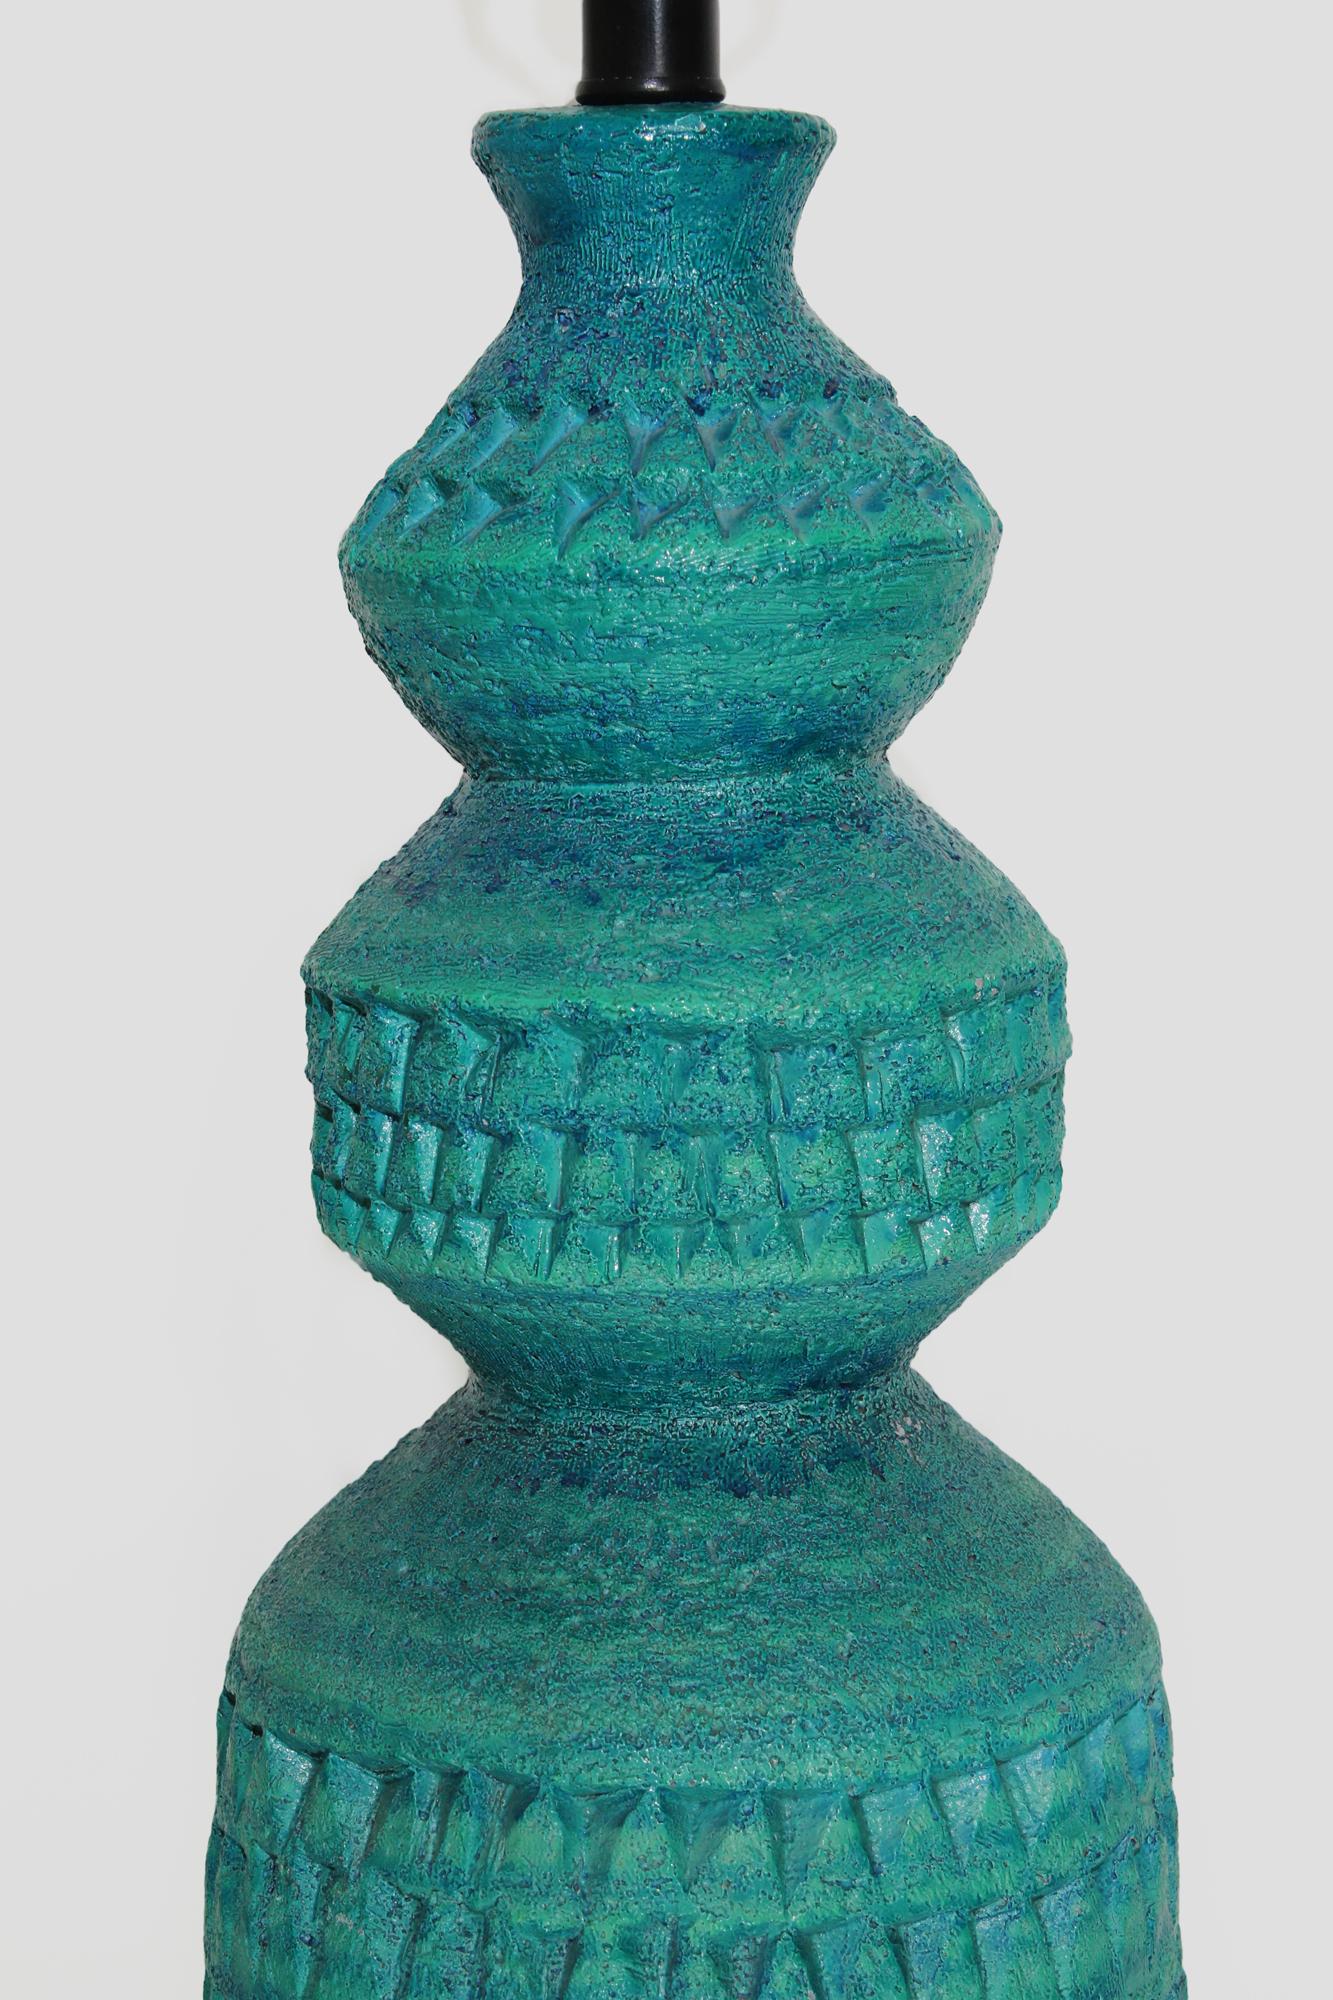 Mid-Century Modern Midcentury Italian Tall Turquoise Ceramic Lamp Attributed to Alvino Bagni